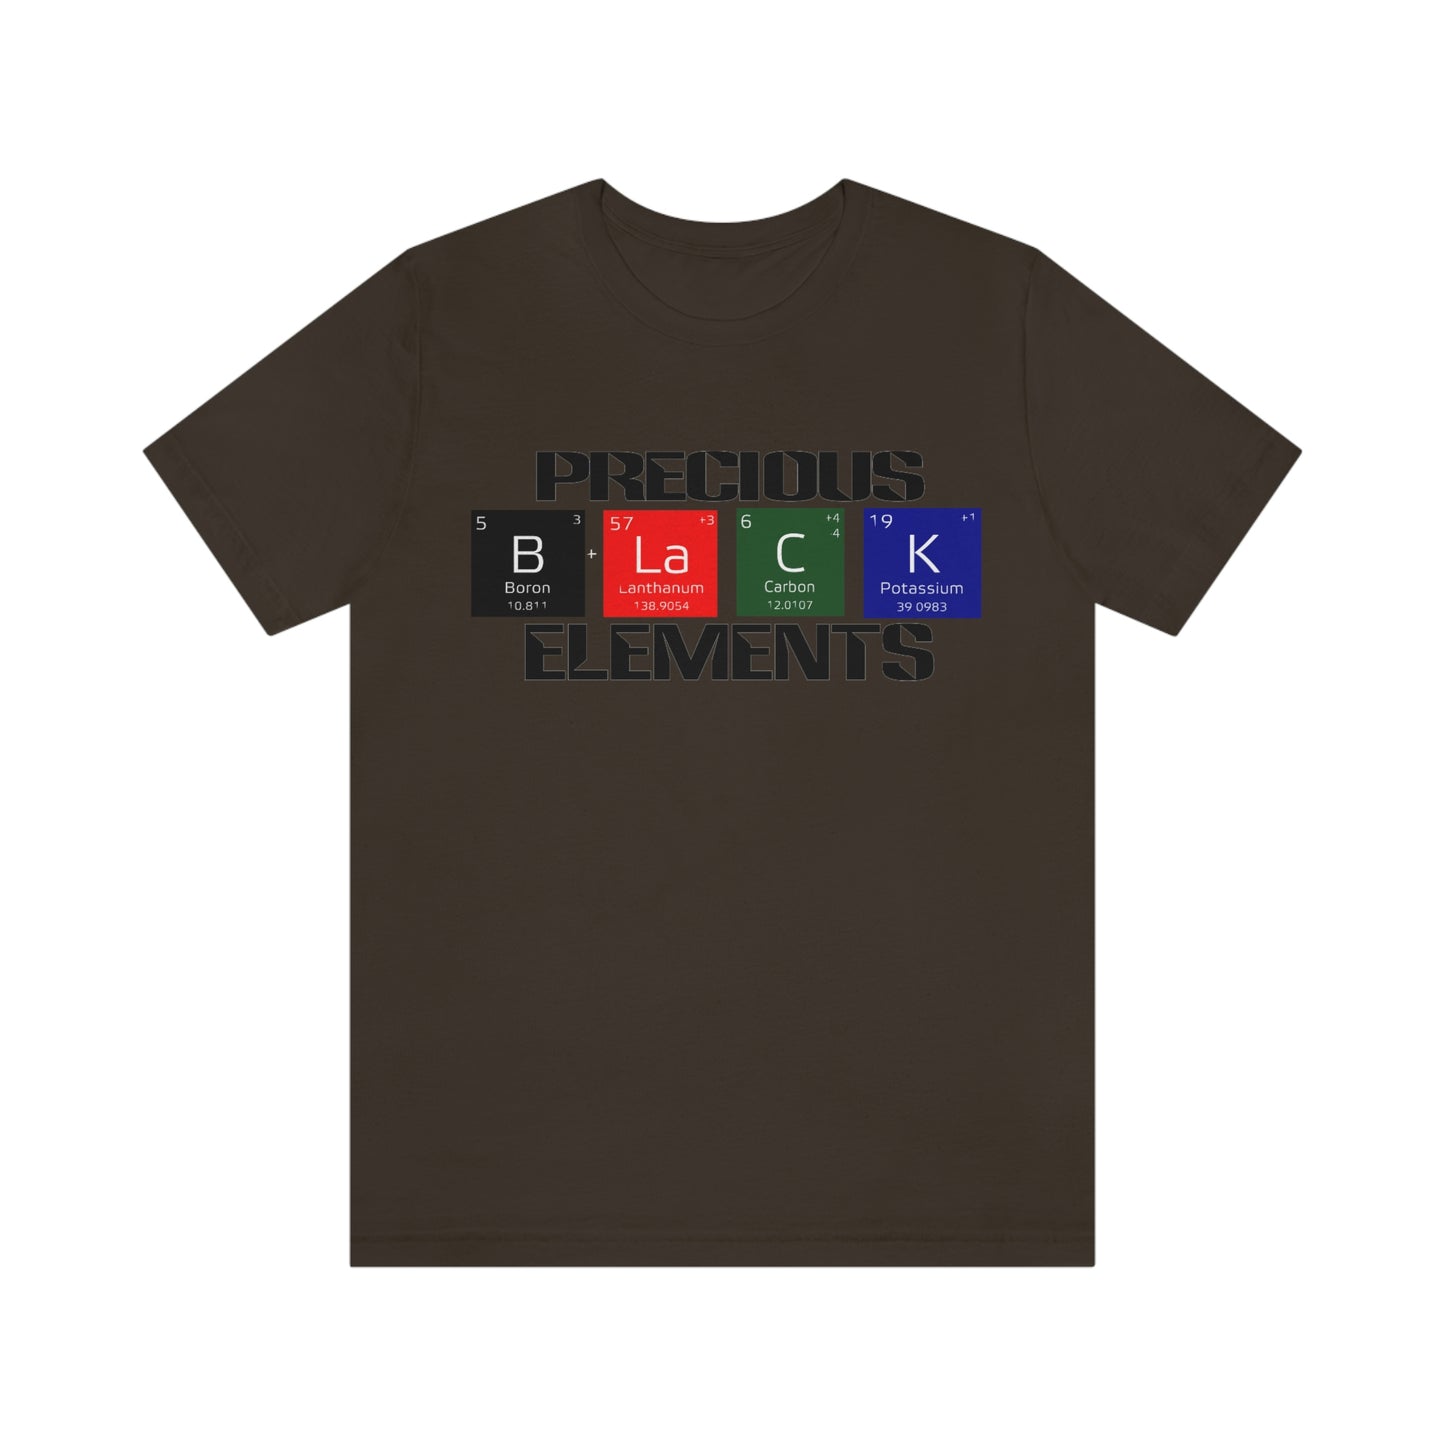 Black elements